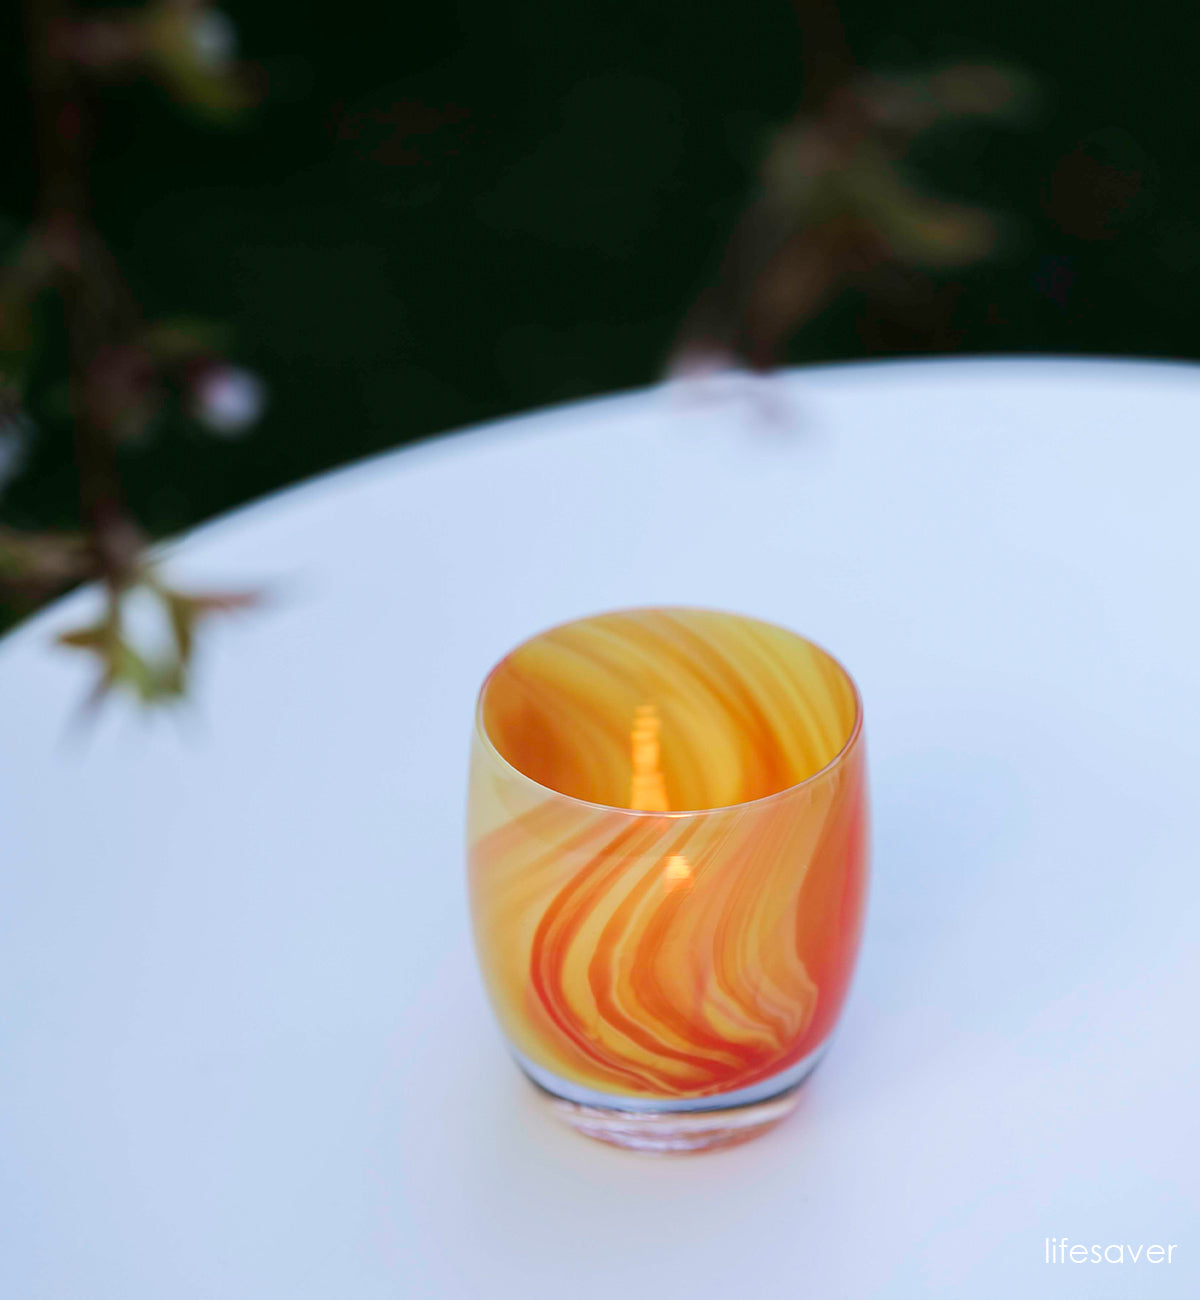 lifesaver orange and yellow swirled, hand-blown glass votive candle holder.